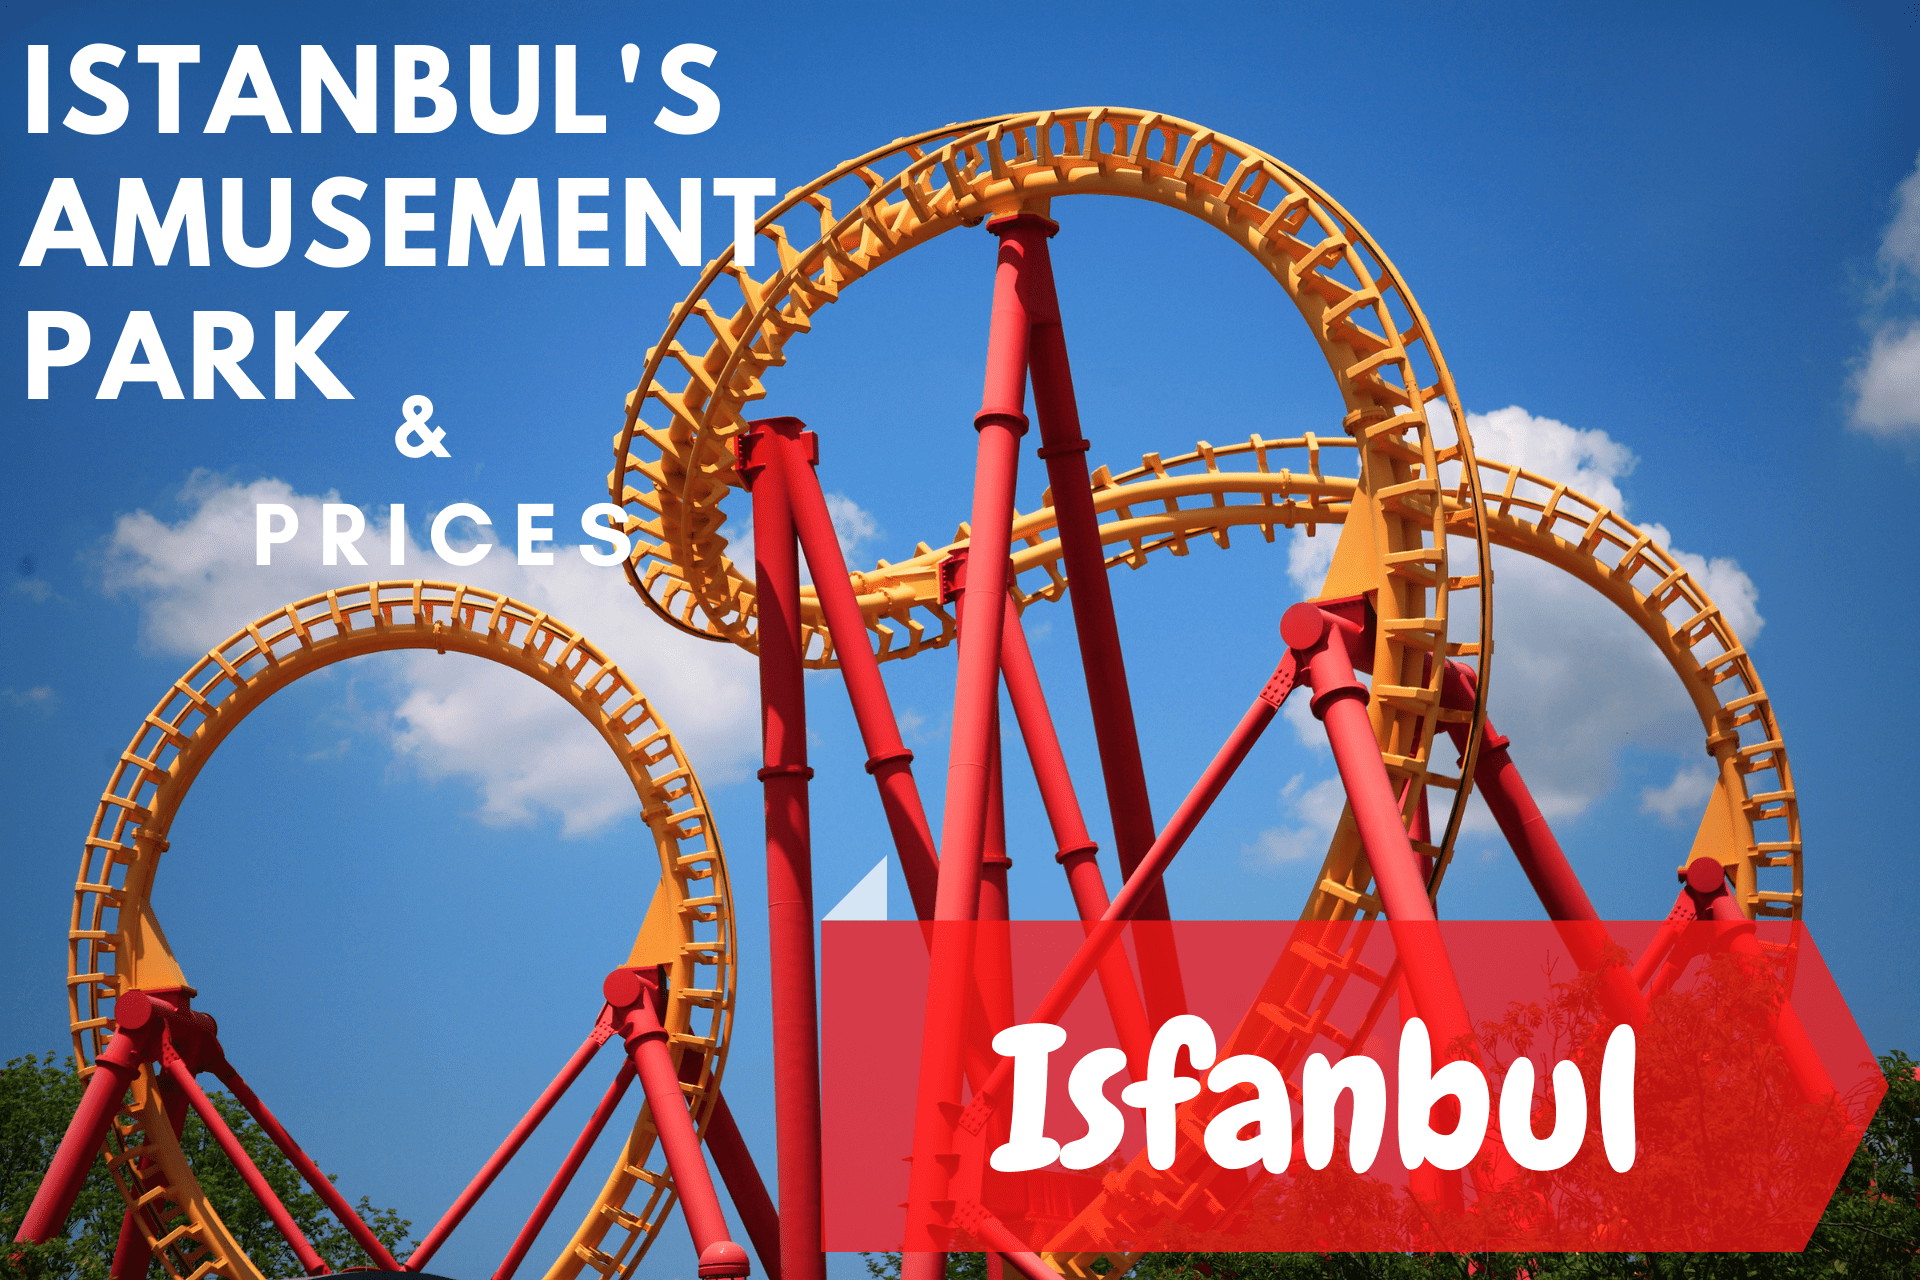 istanbul theme park isfanbul amusement park prices in 2021 ex vialand theme park turkey travel journal turkey travel journal